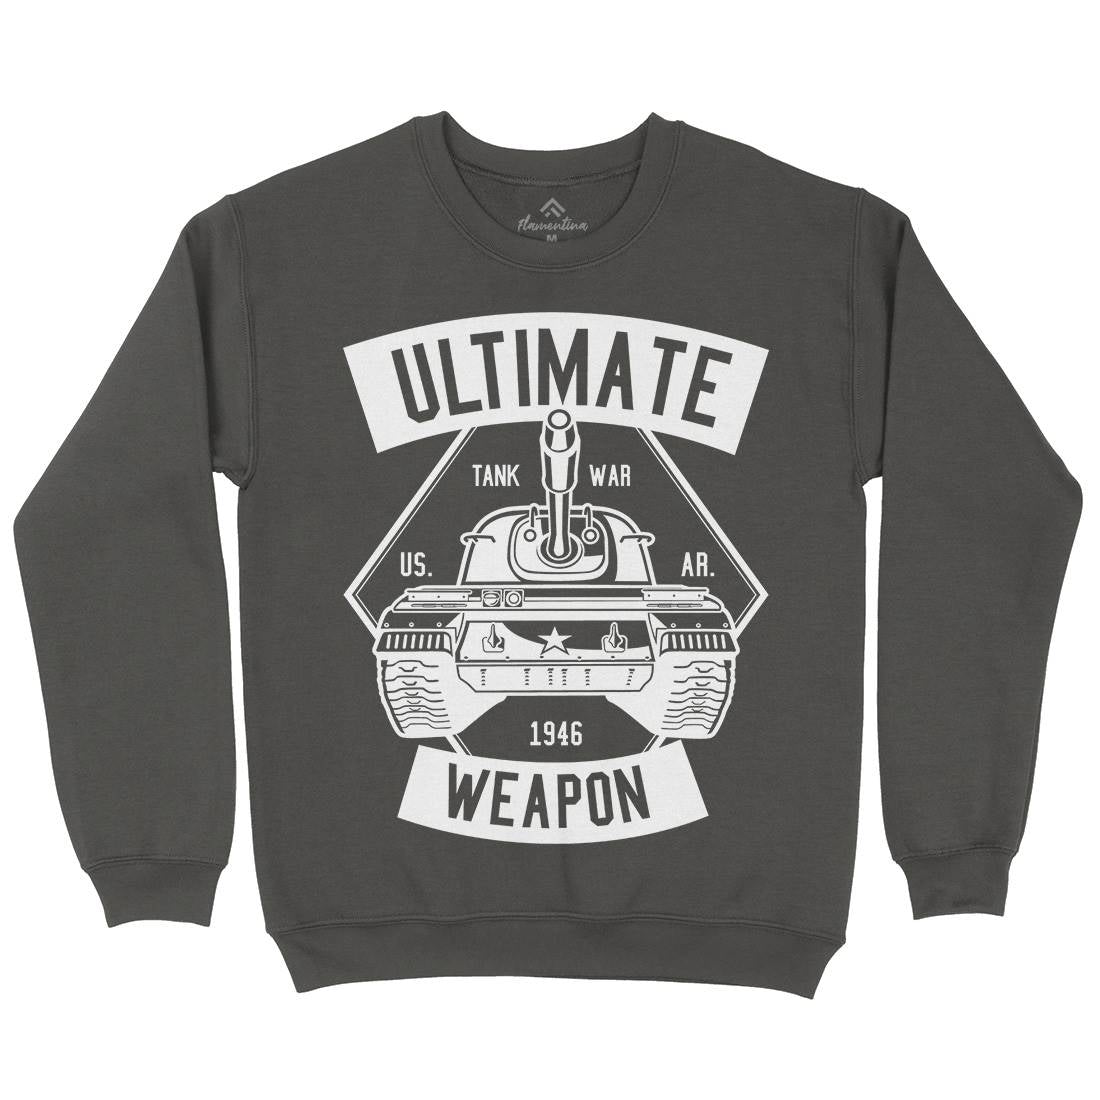 Tank War Ultimate Weapon Kids Crew Neck Sweatshirt Army B649